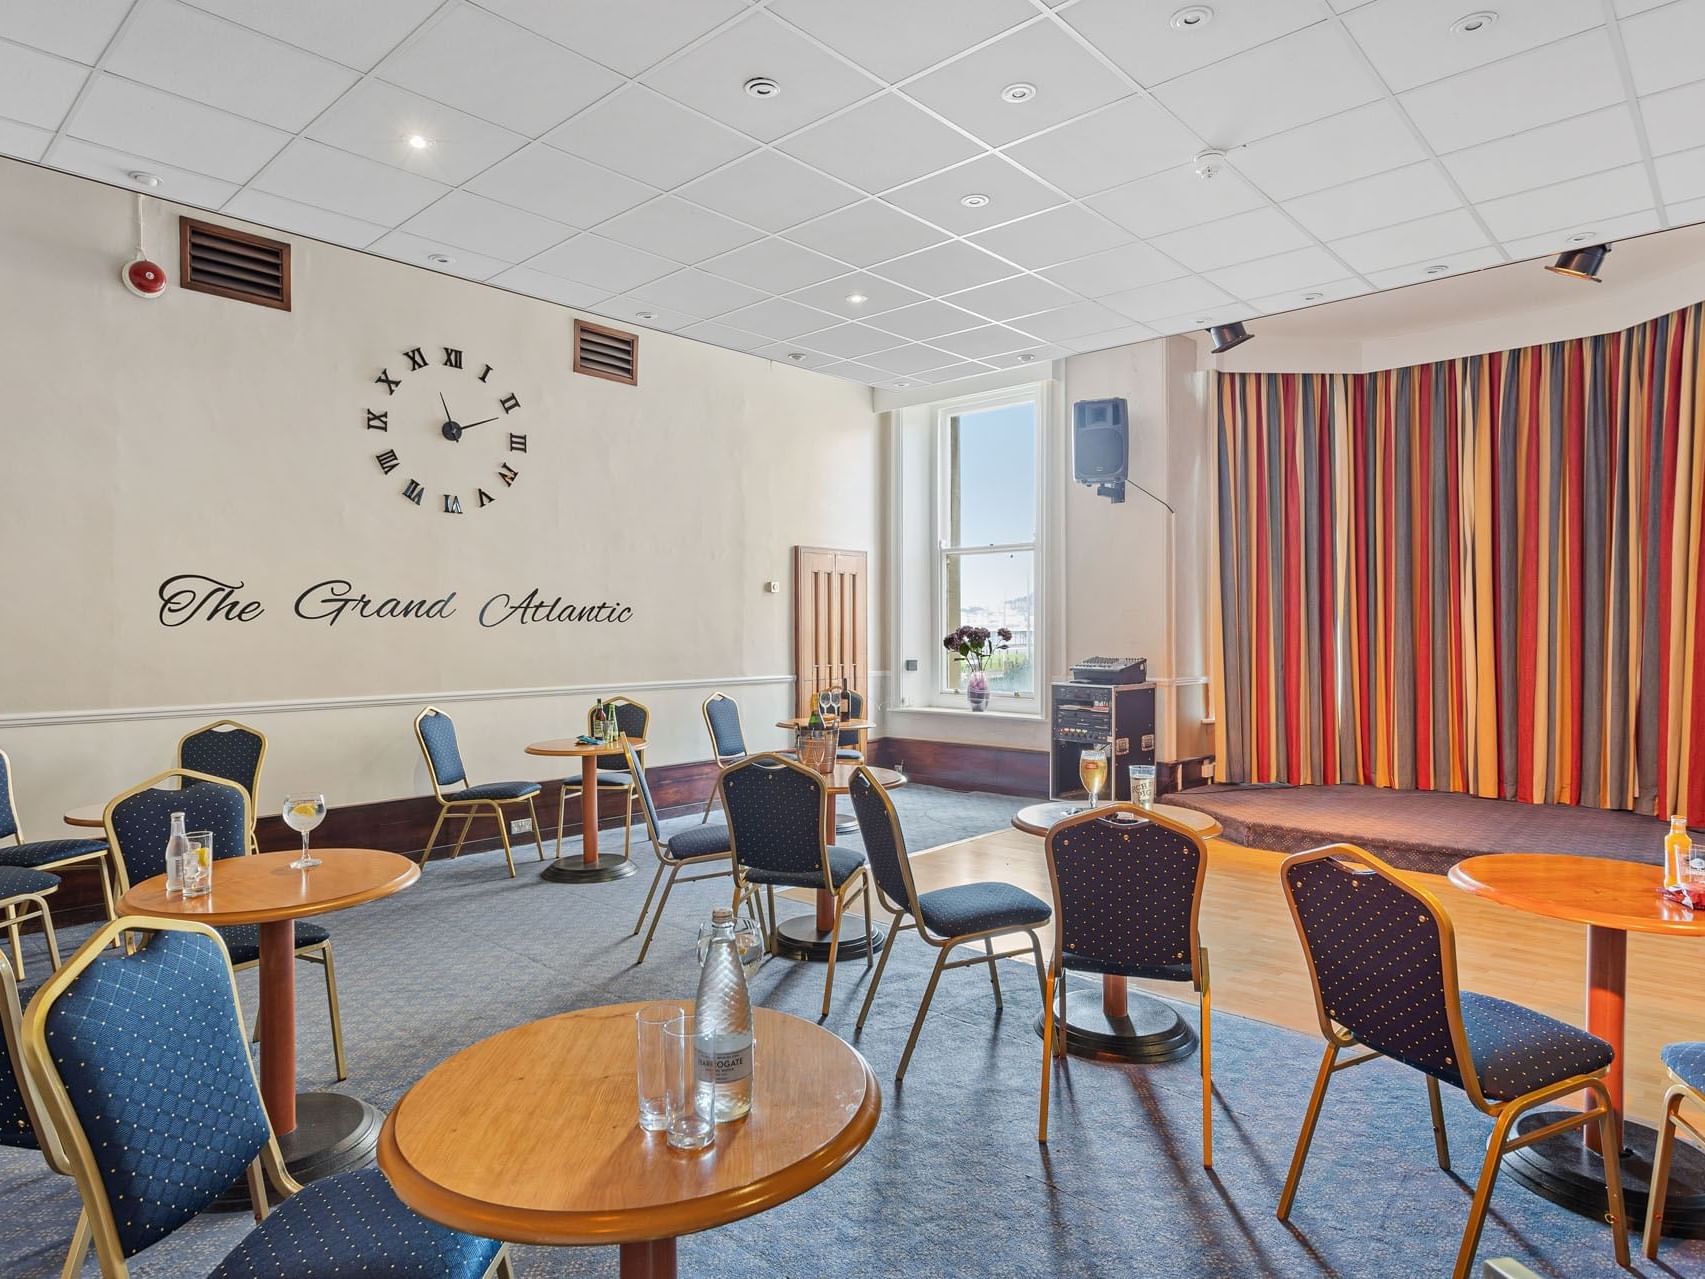 Avon Suite at The Grand Atlantic Hotel in Weston-super-Mare